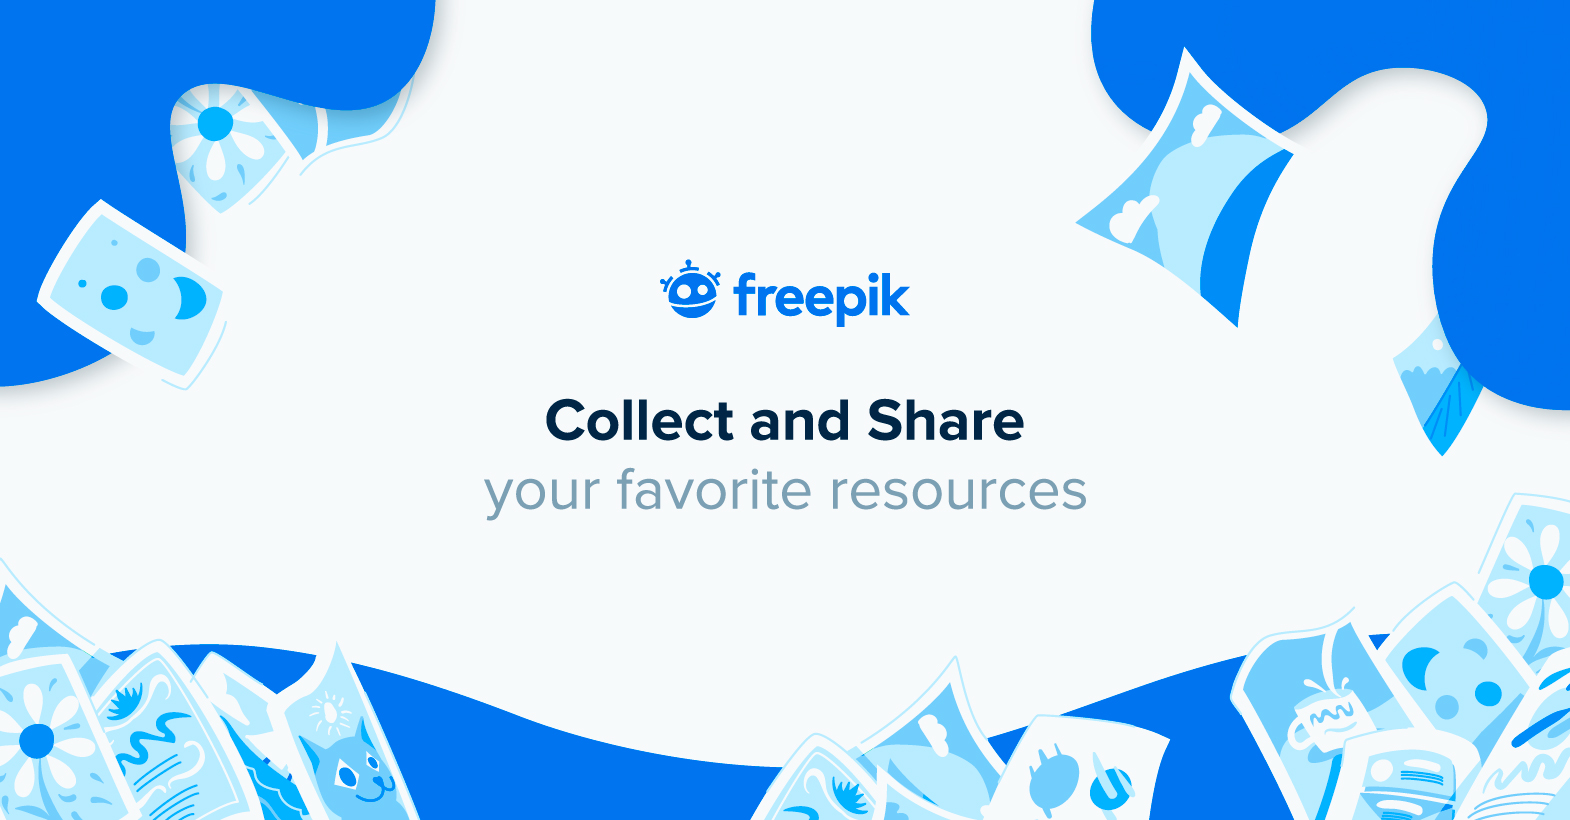 freepik downloader offers